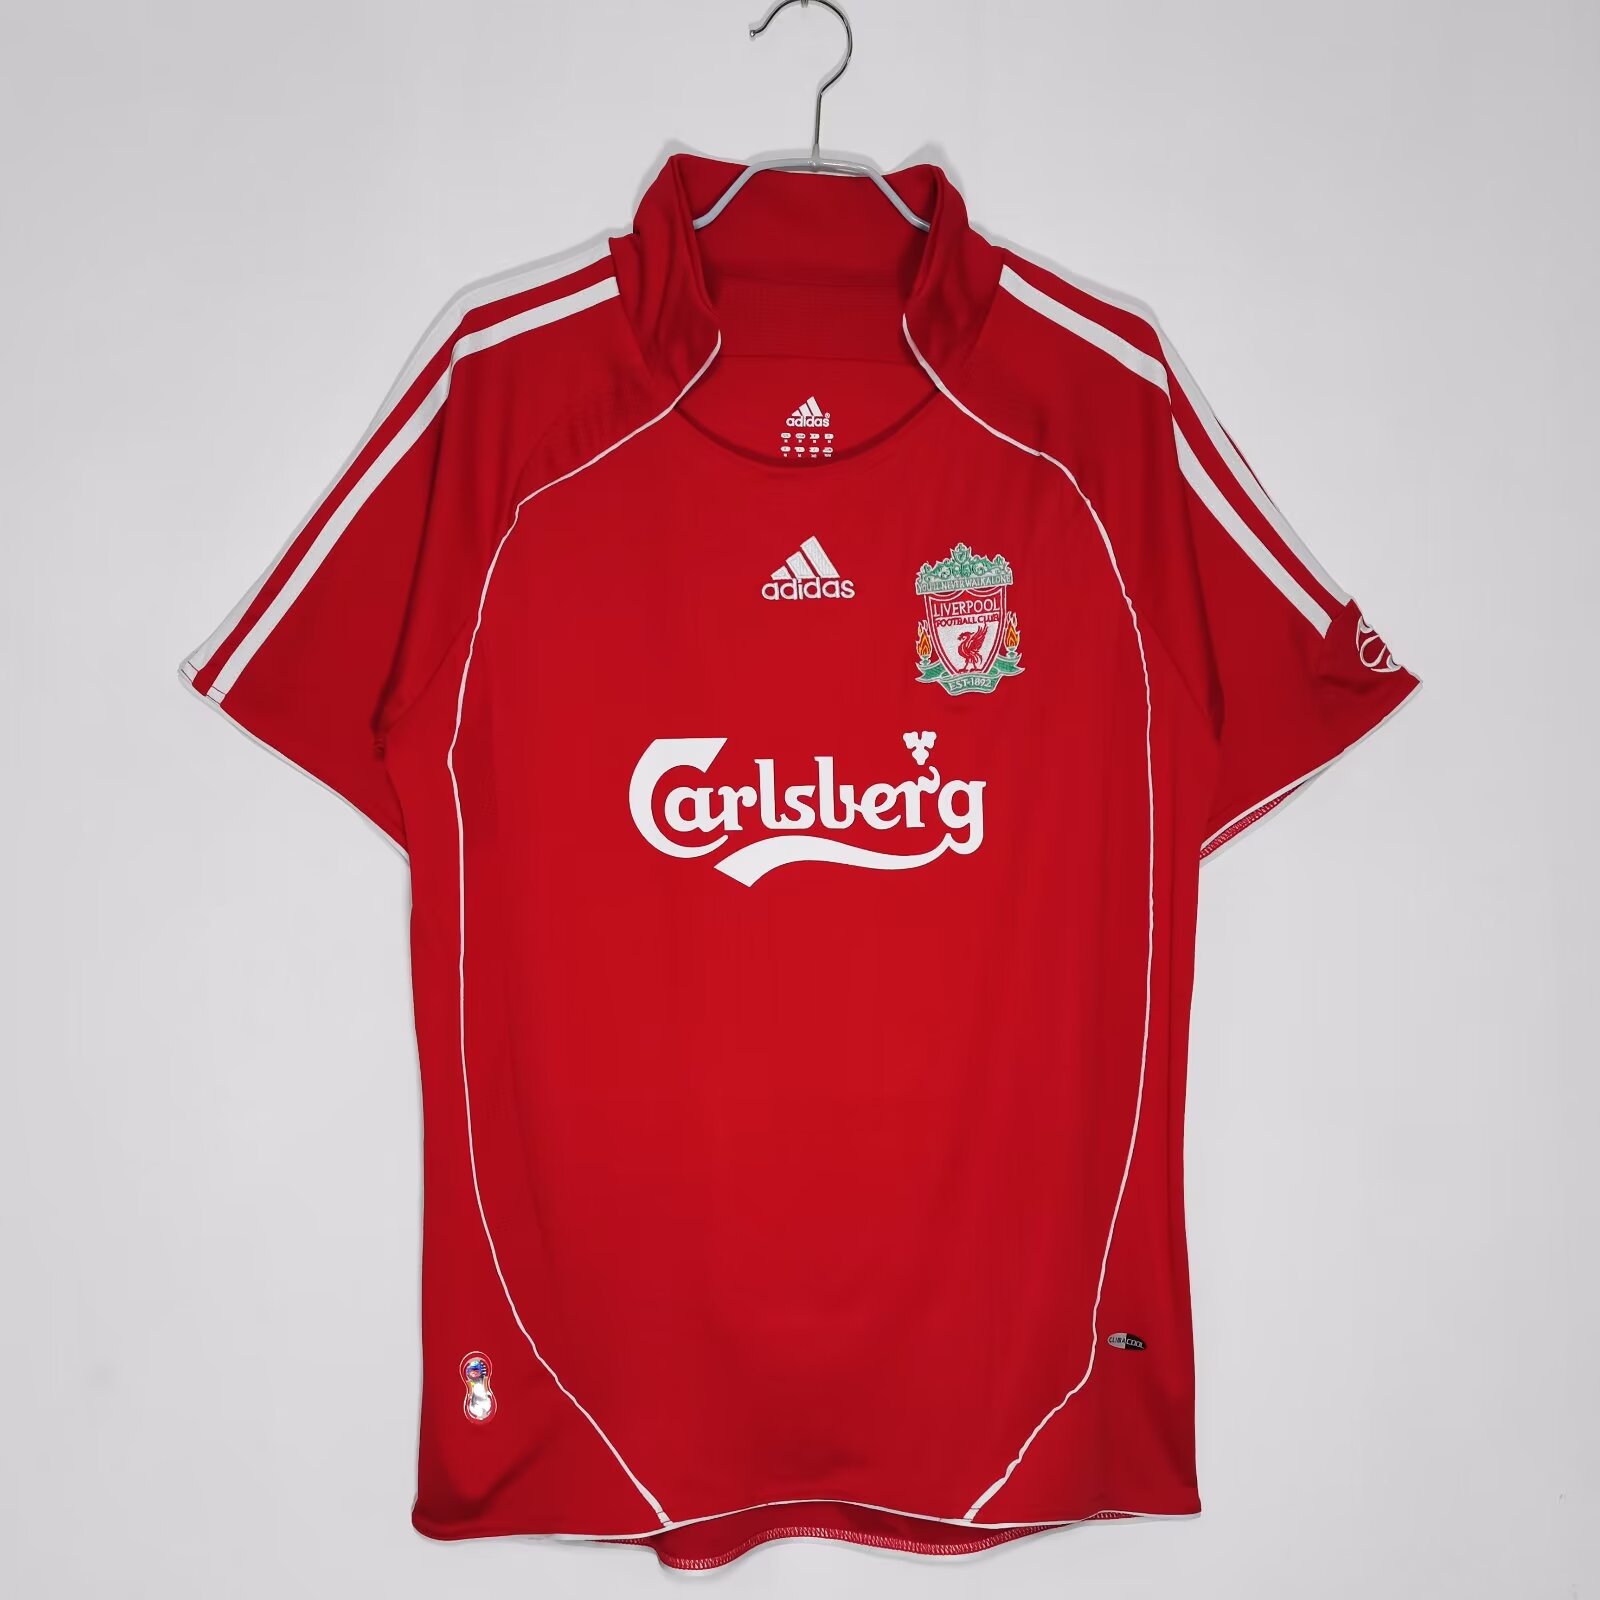 2006/07 Liverpool F.C. retro